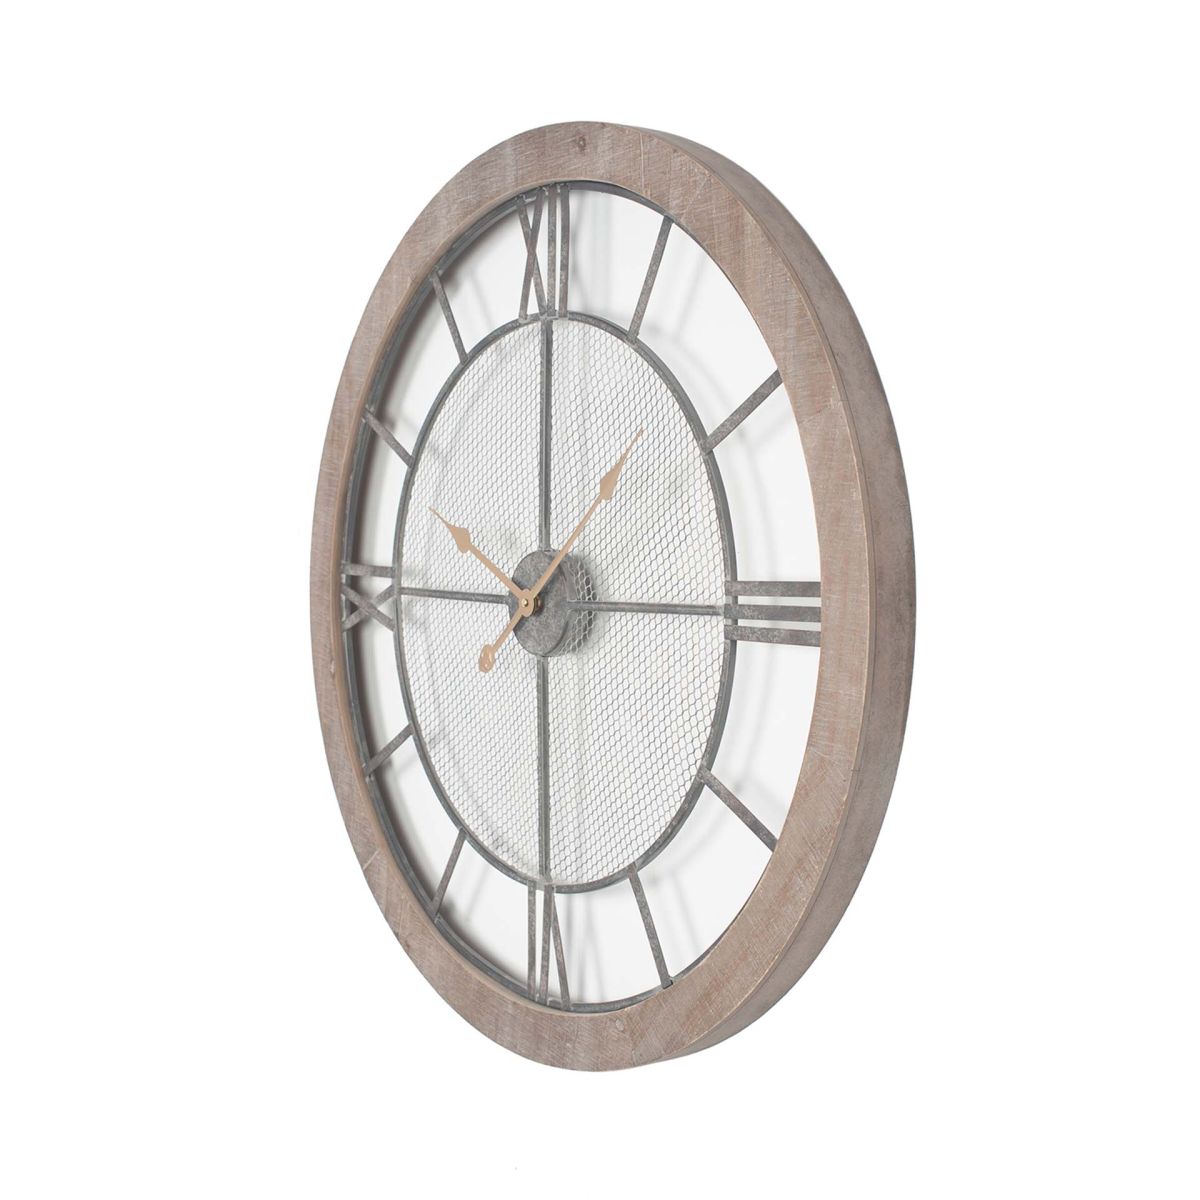 Natural Wood and Metal Round Wall Clock